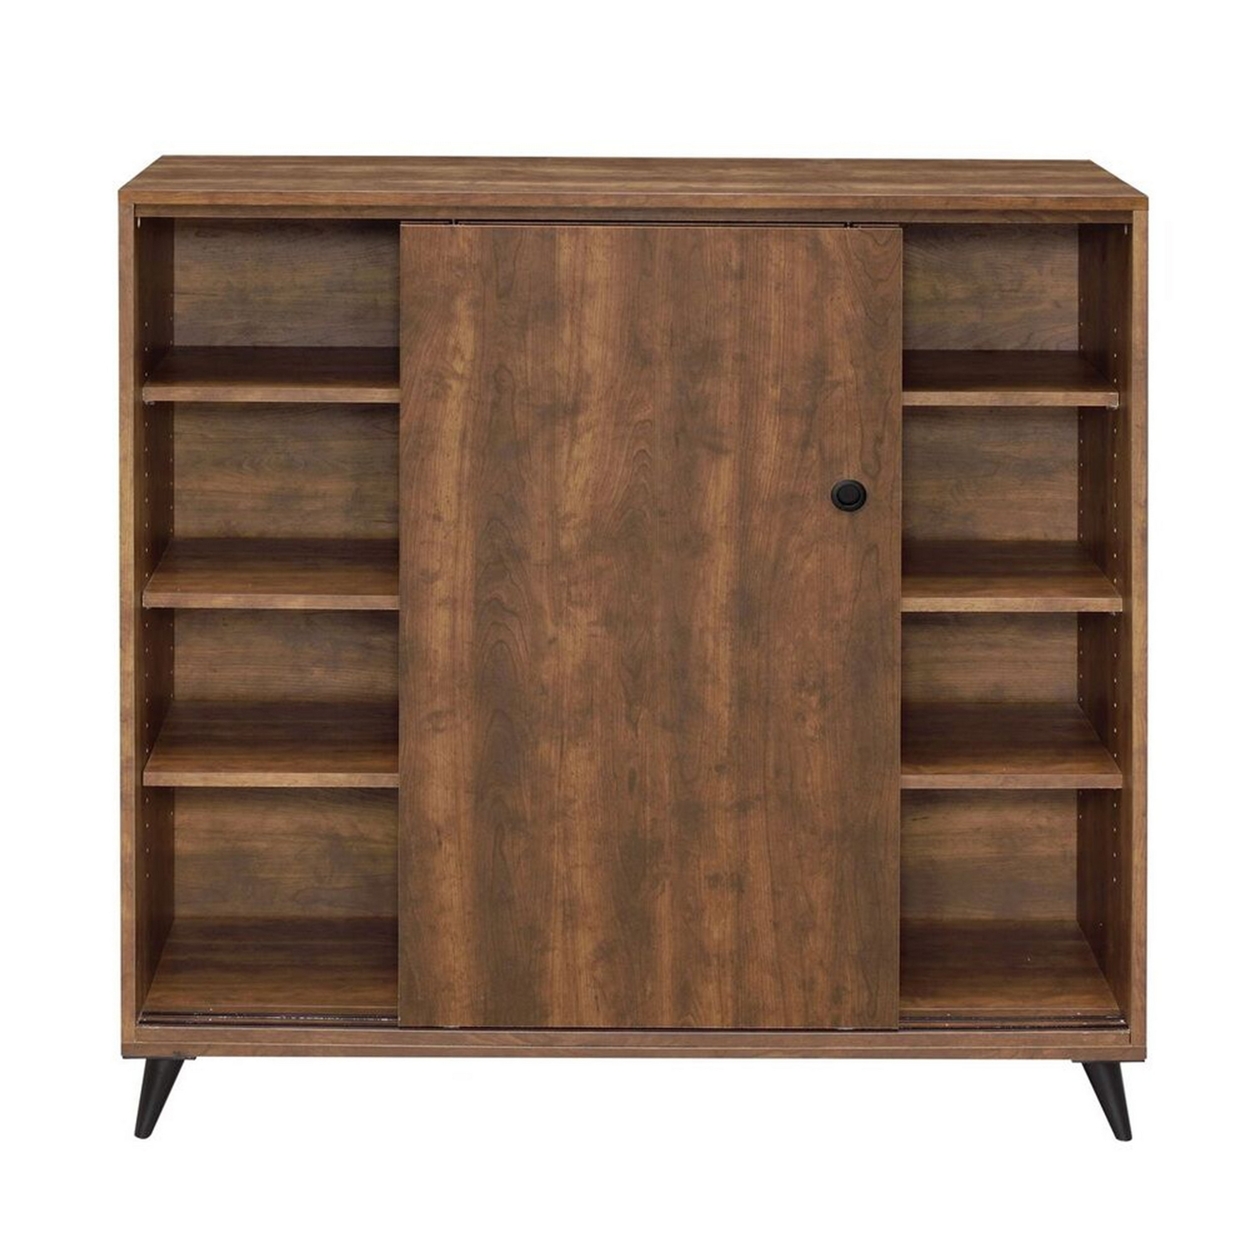 Wooden Shoe Cabinet With 2 Sliding Doors And Splayed Legs, Oak Brown- Saltoro Sherpi